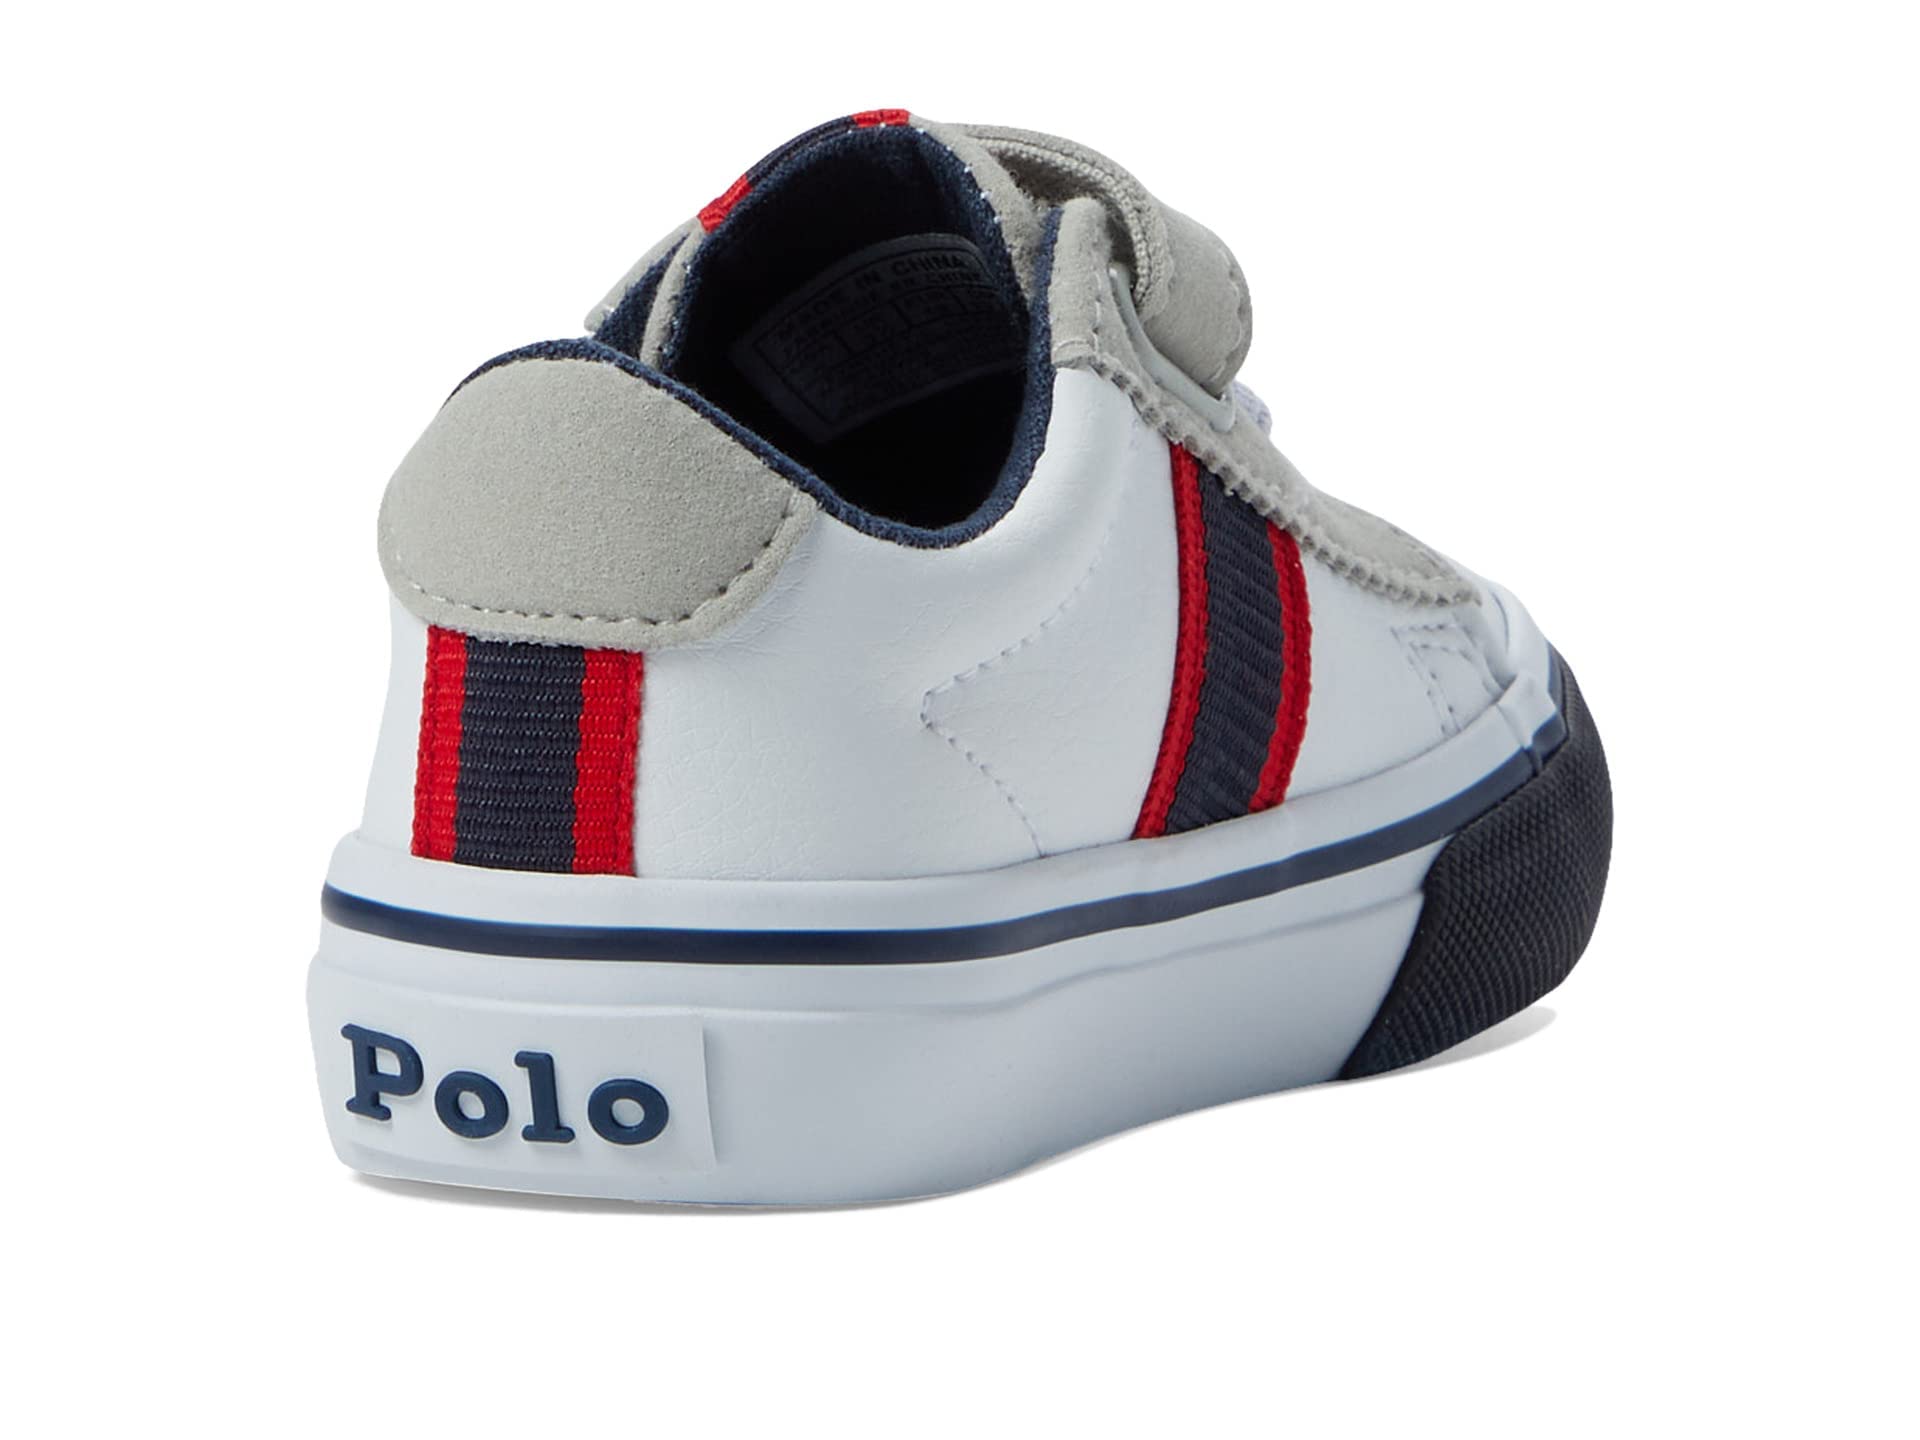 POLO RALPH LAUREN Unisex-Child Wescott Ps (Toddler) Sneaker